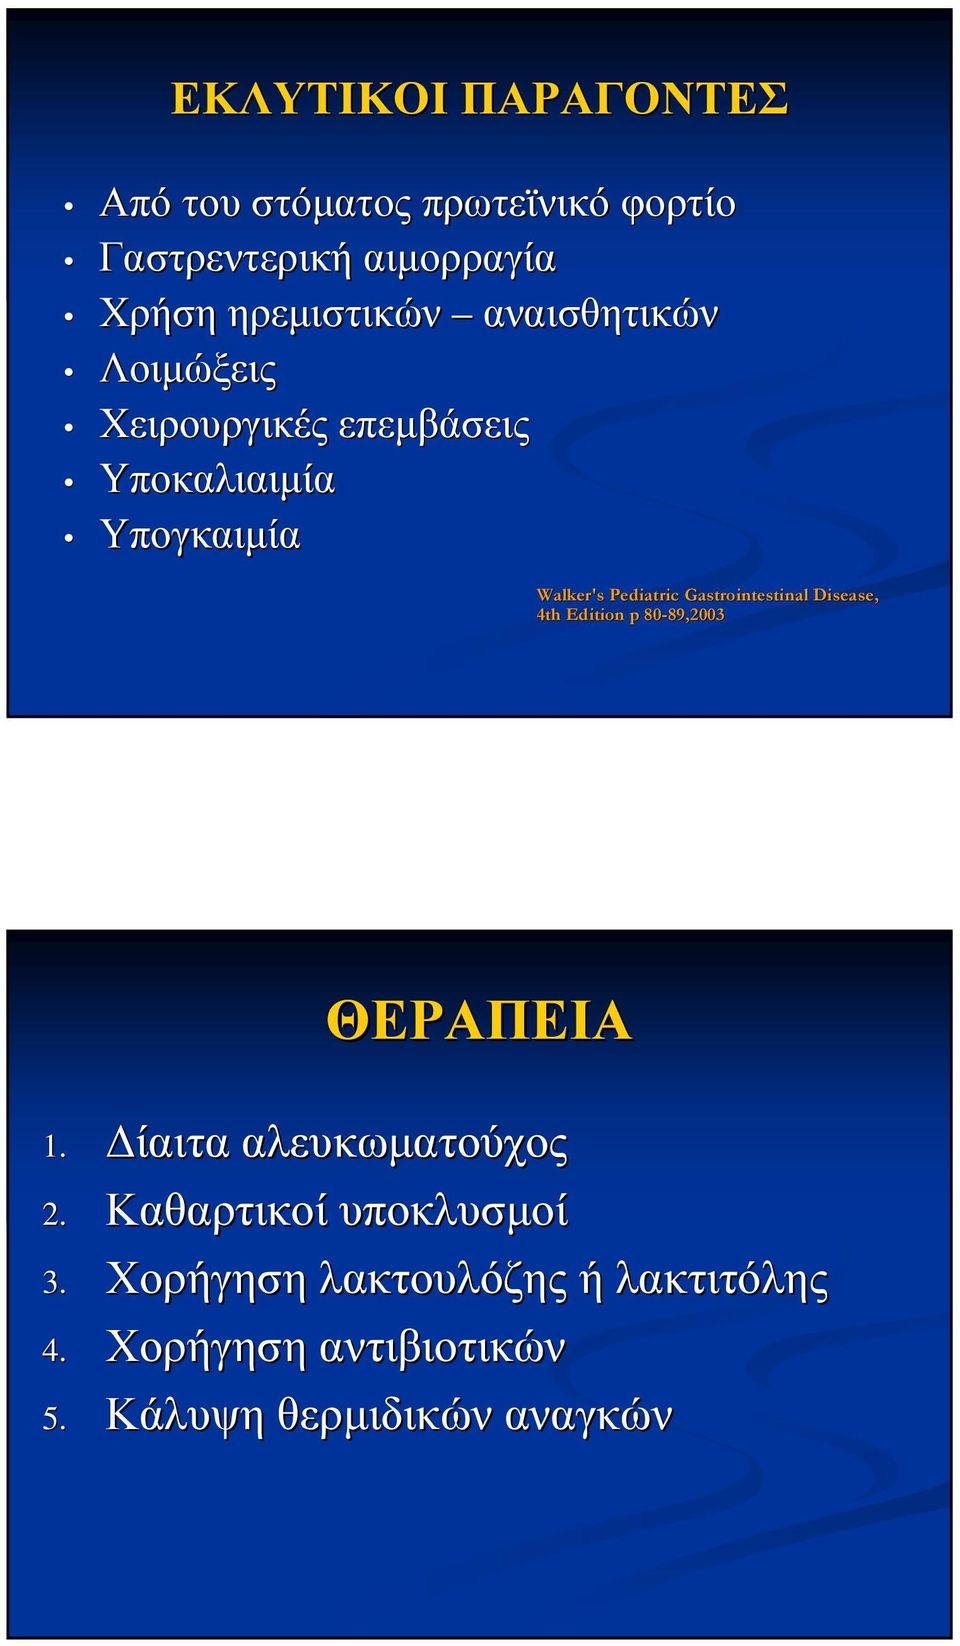 Pediatric Gastrointestinal Disease, 4th Edition p 80-89 89,2003 ΘΕΡΑΠΕΙΑ 1.